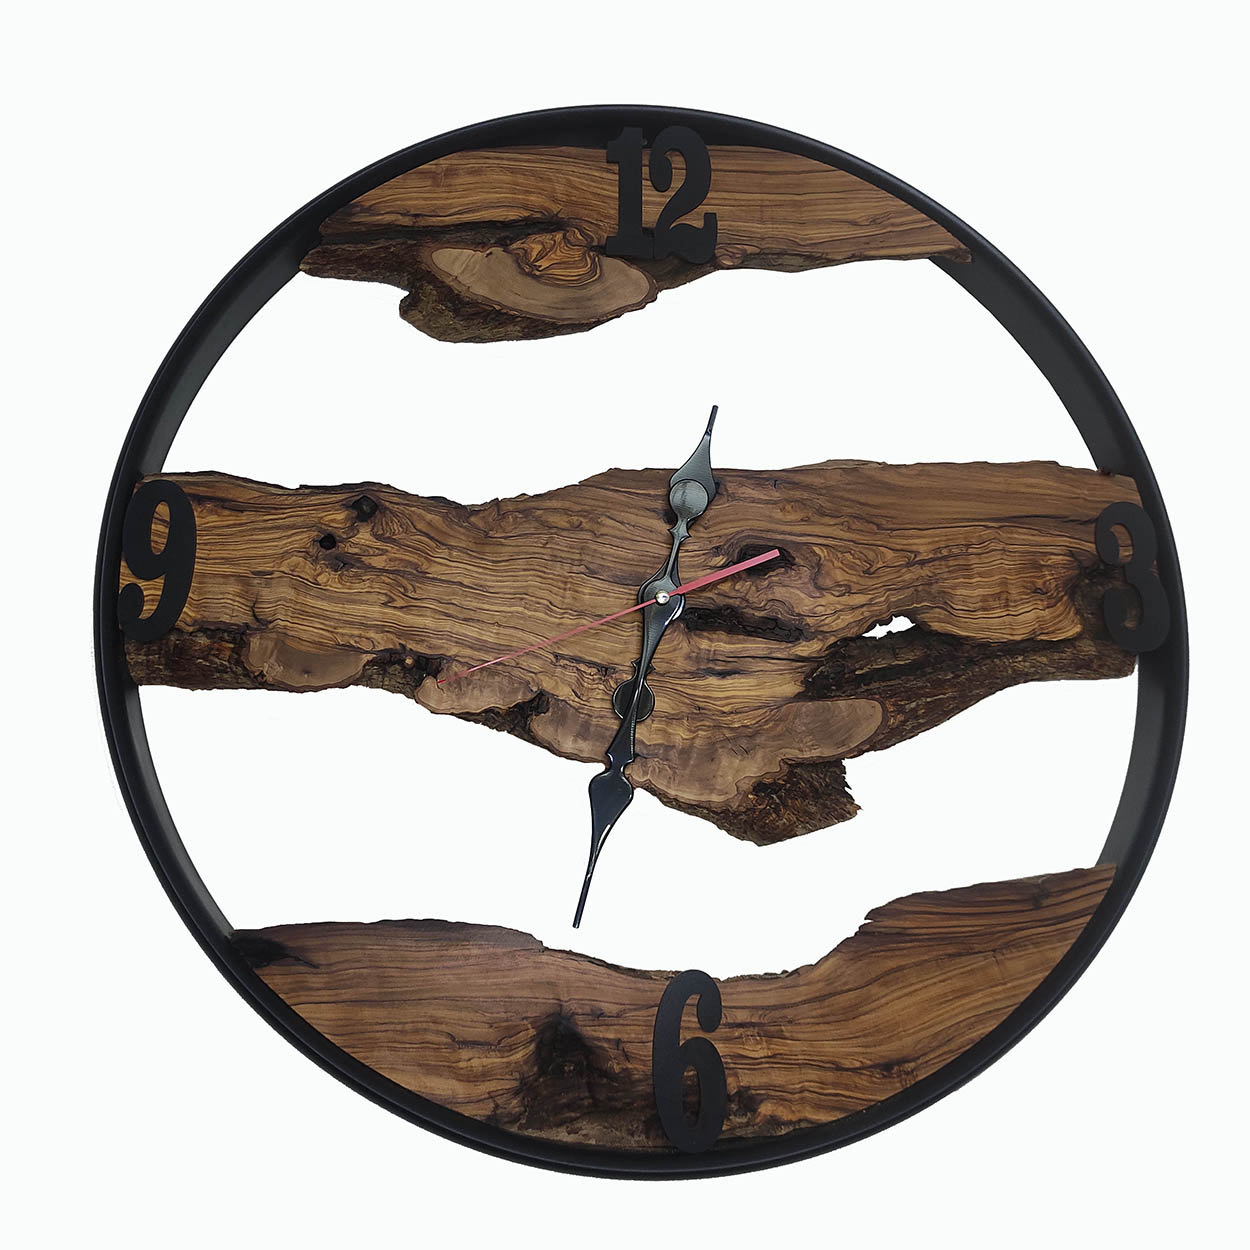  ساعت دیواری چوبی مدل روستیک کد 0601